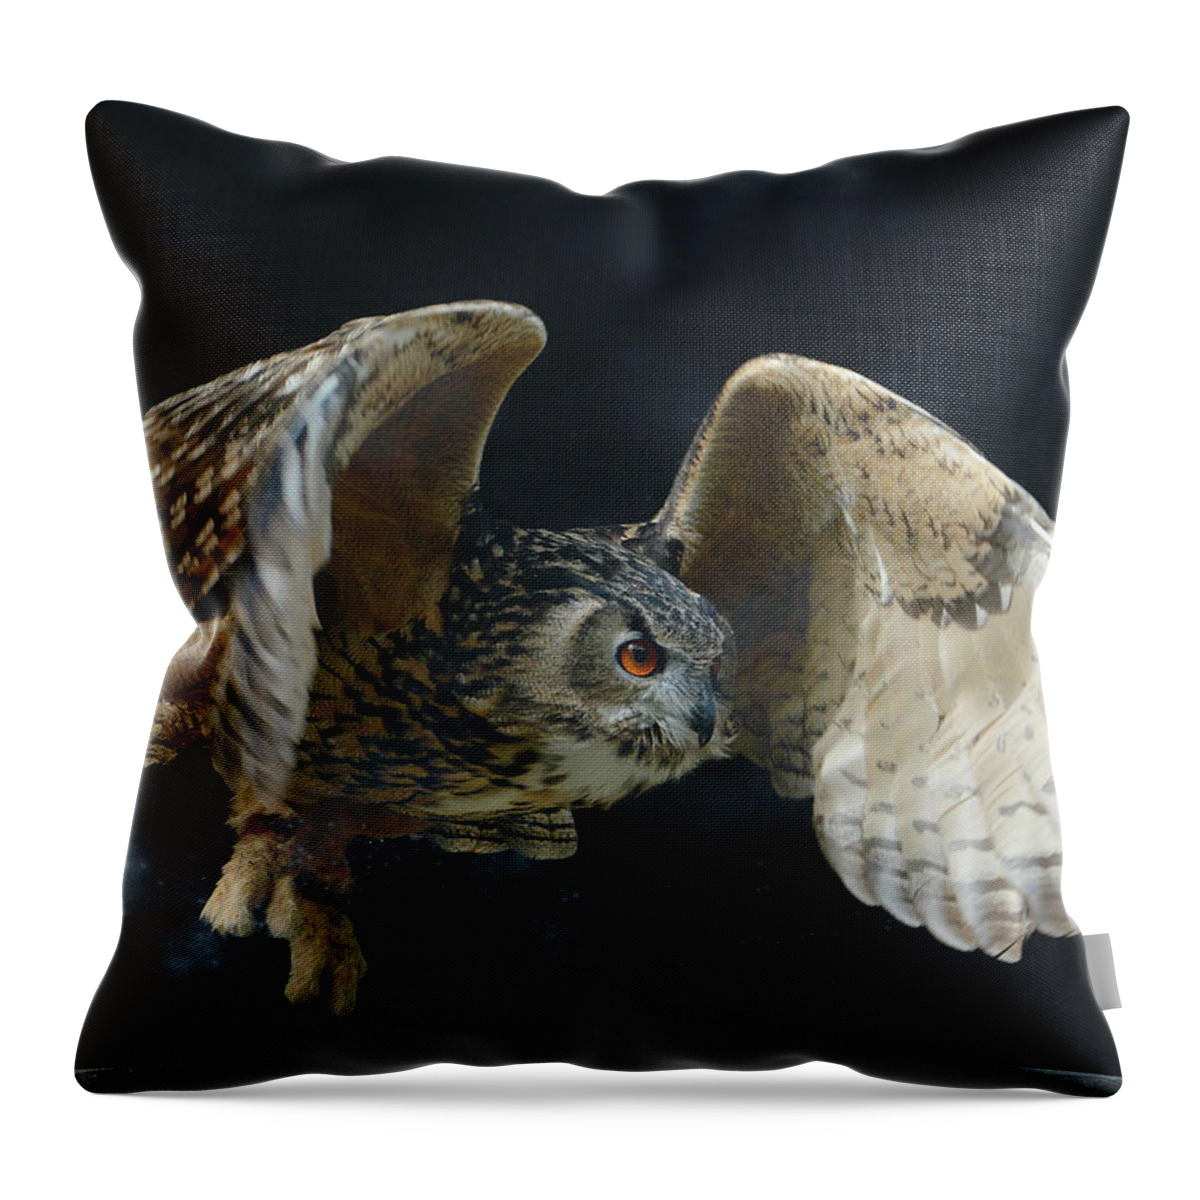 Owl Throw Pillow featuring the photograph A Little Night Magic by Fraida Gutovich